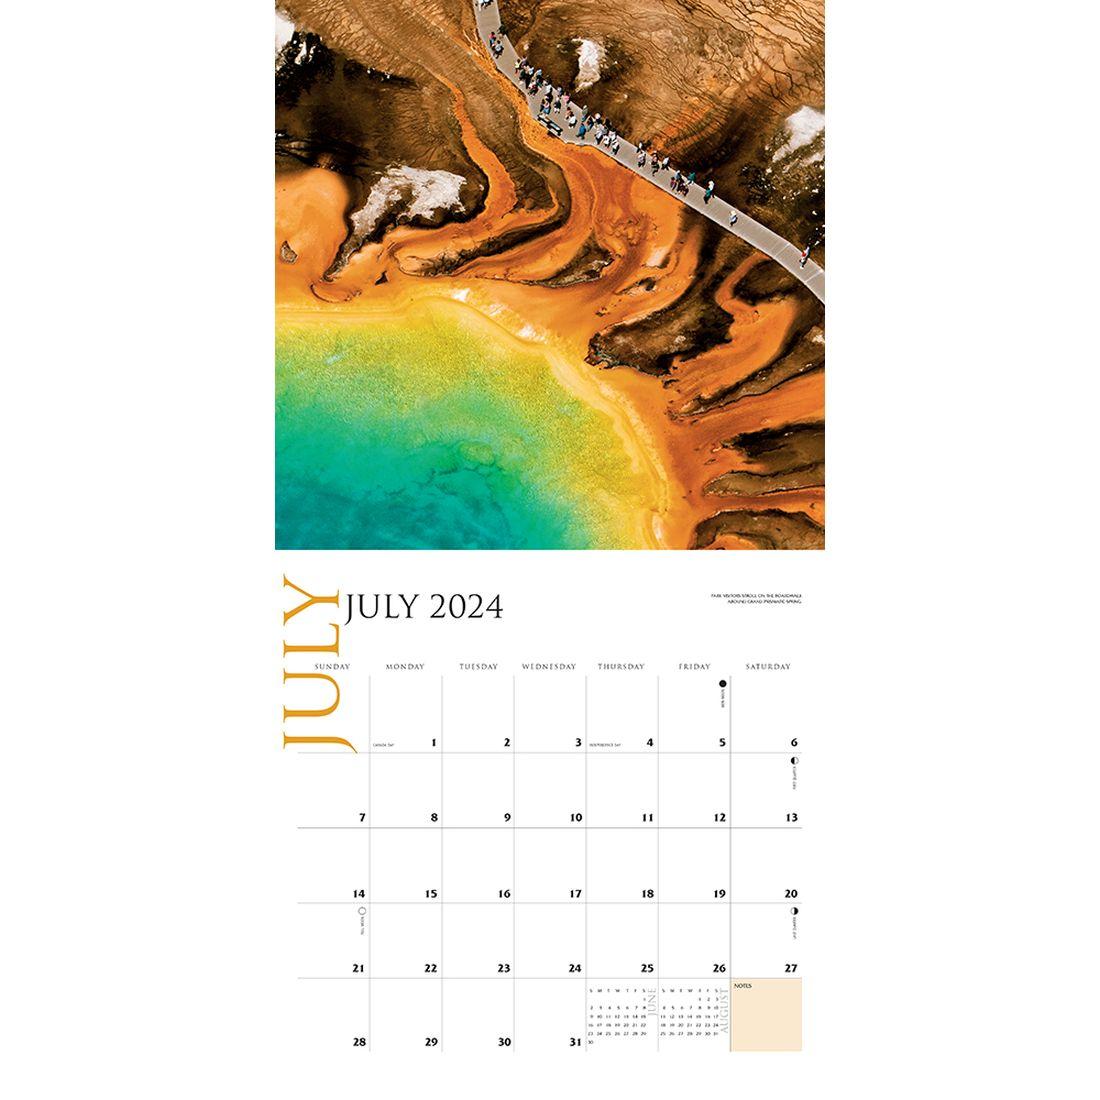 Yellowstone 2024 Wall Calendar